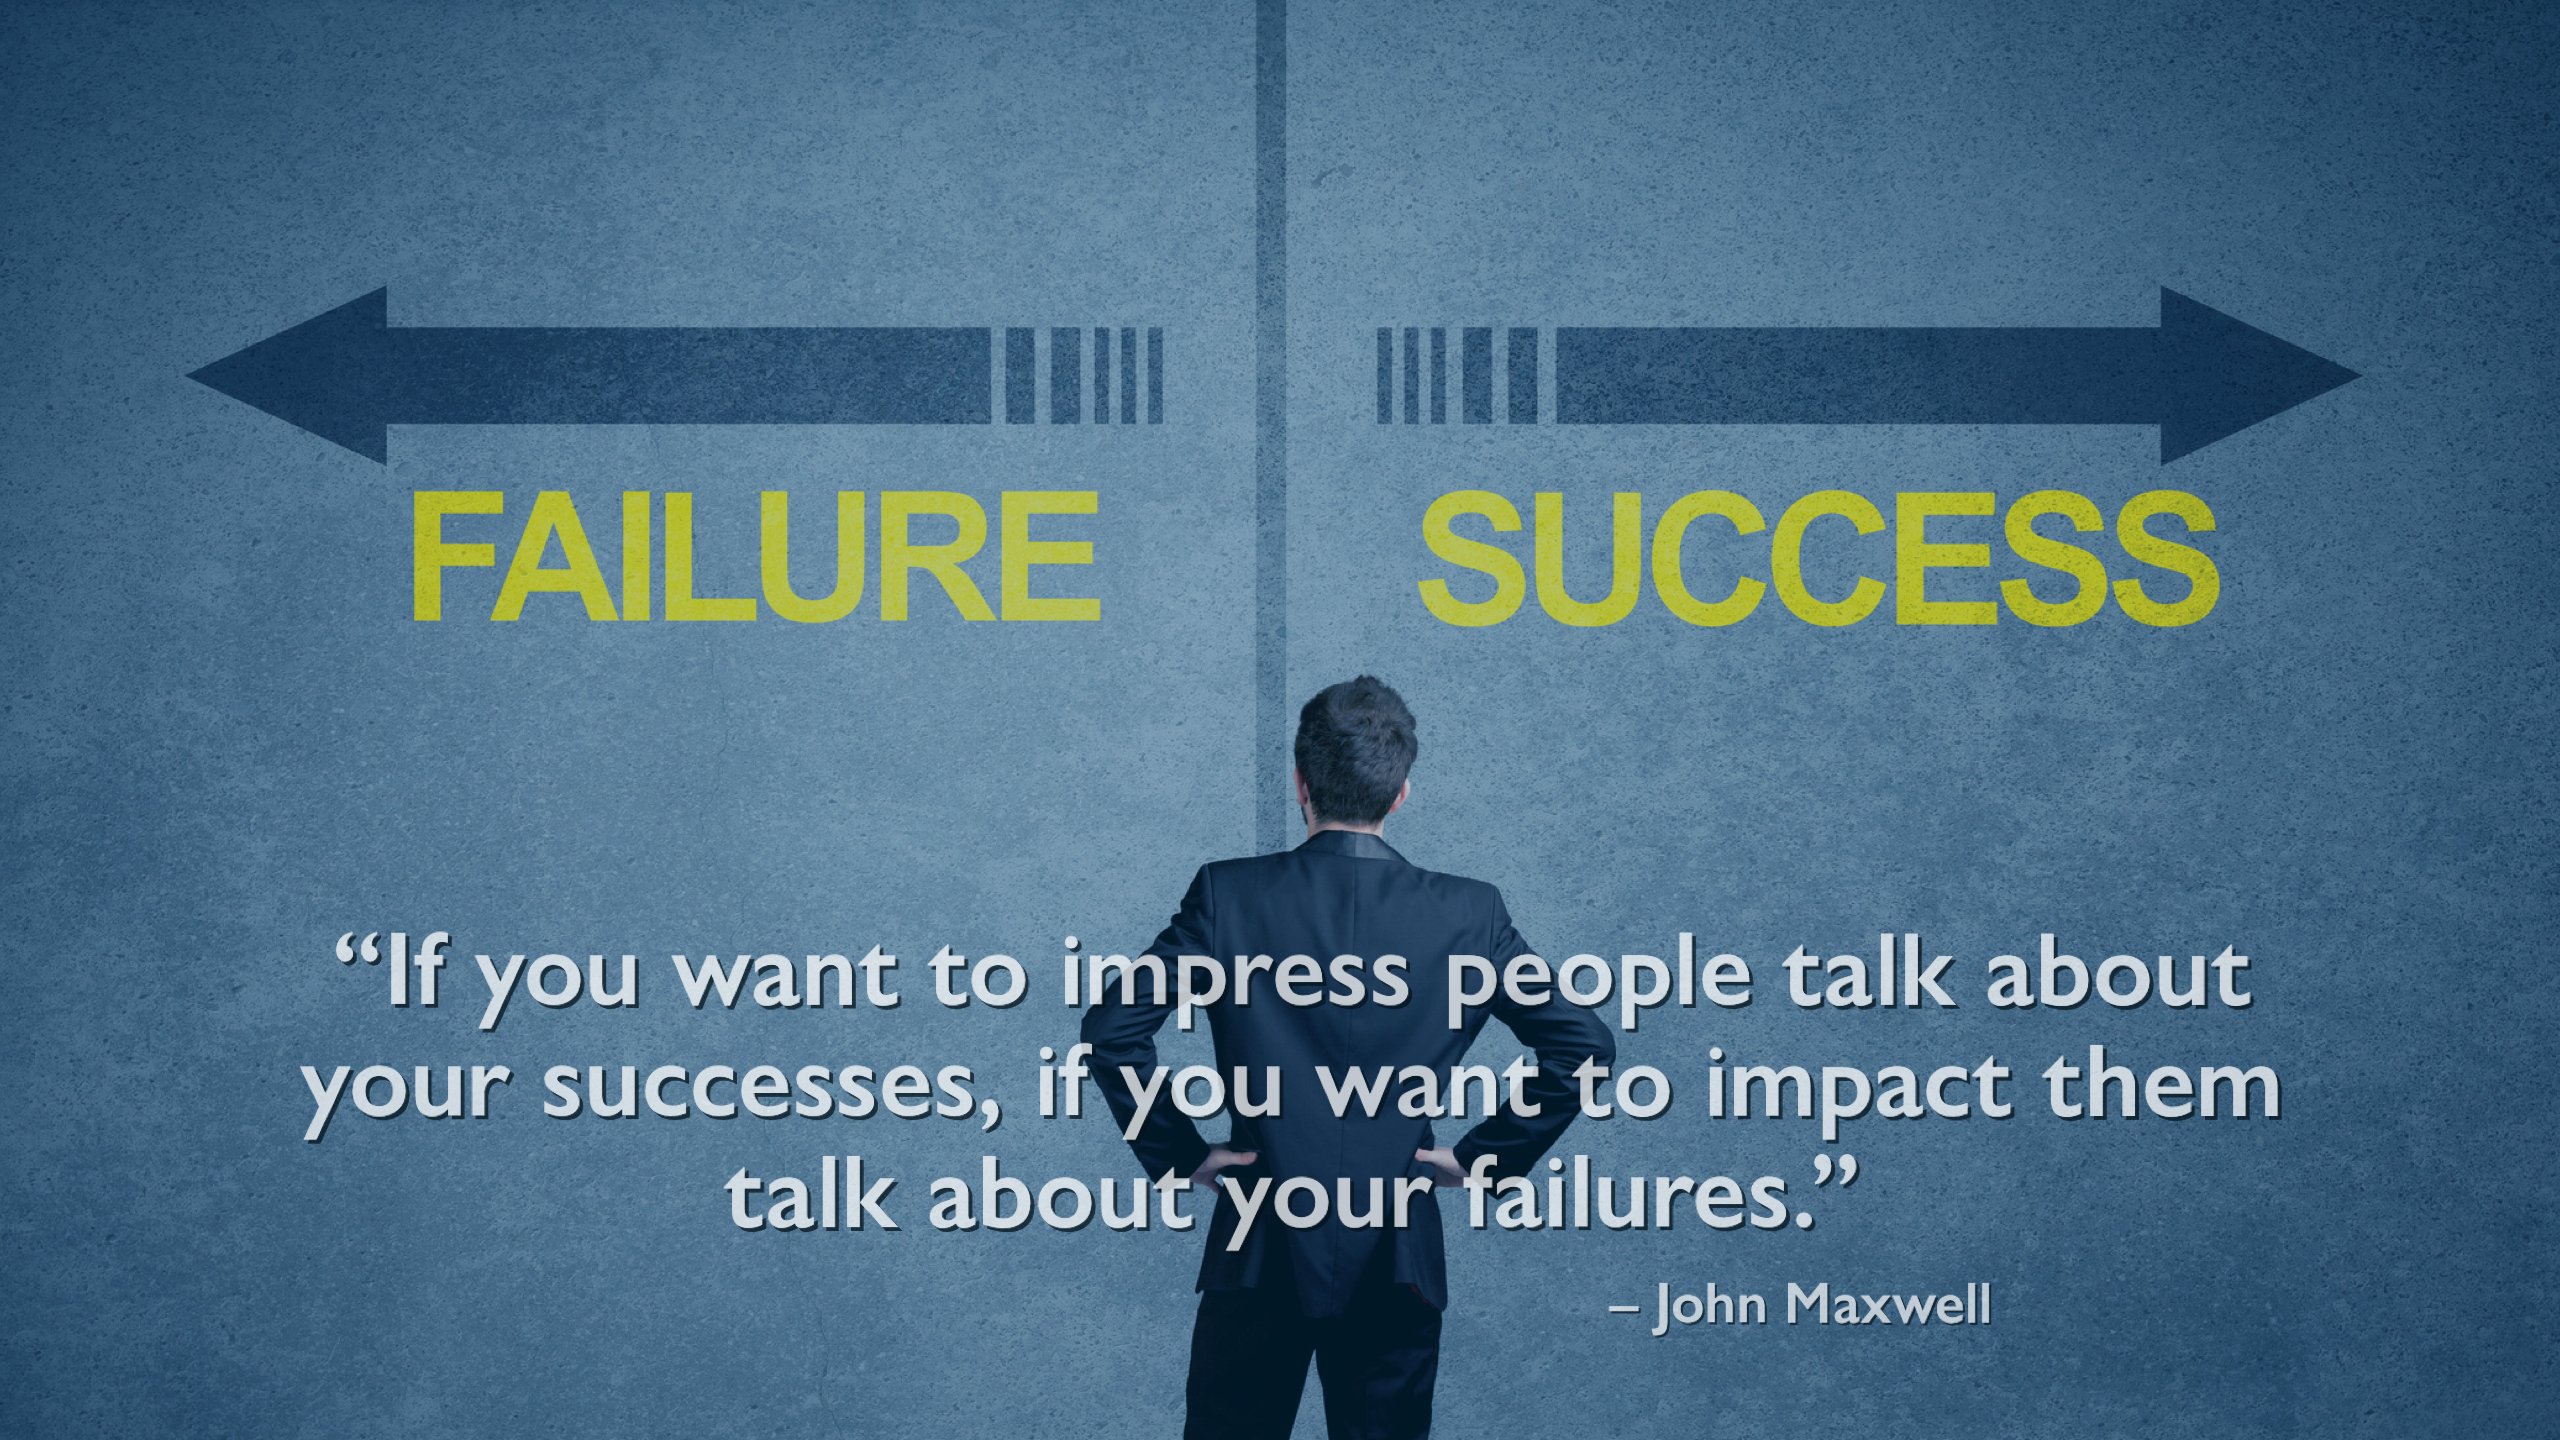 John Maxwell quote